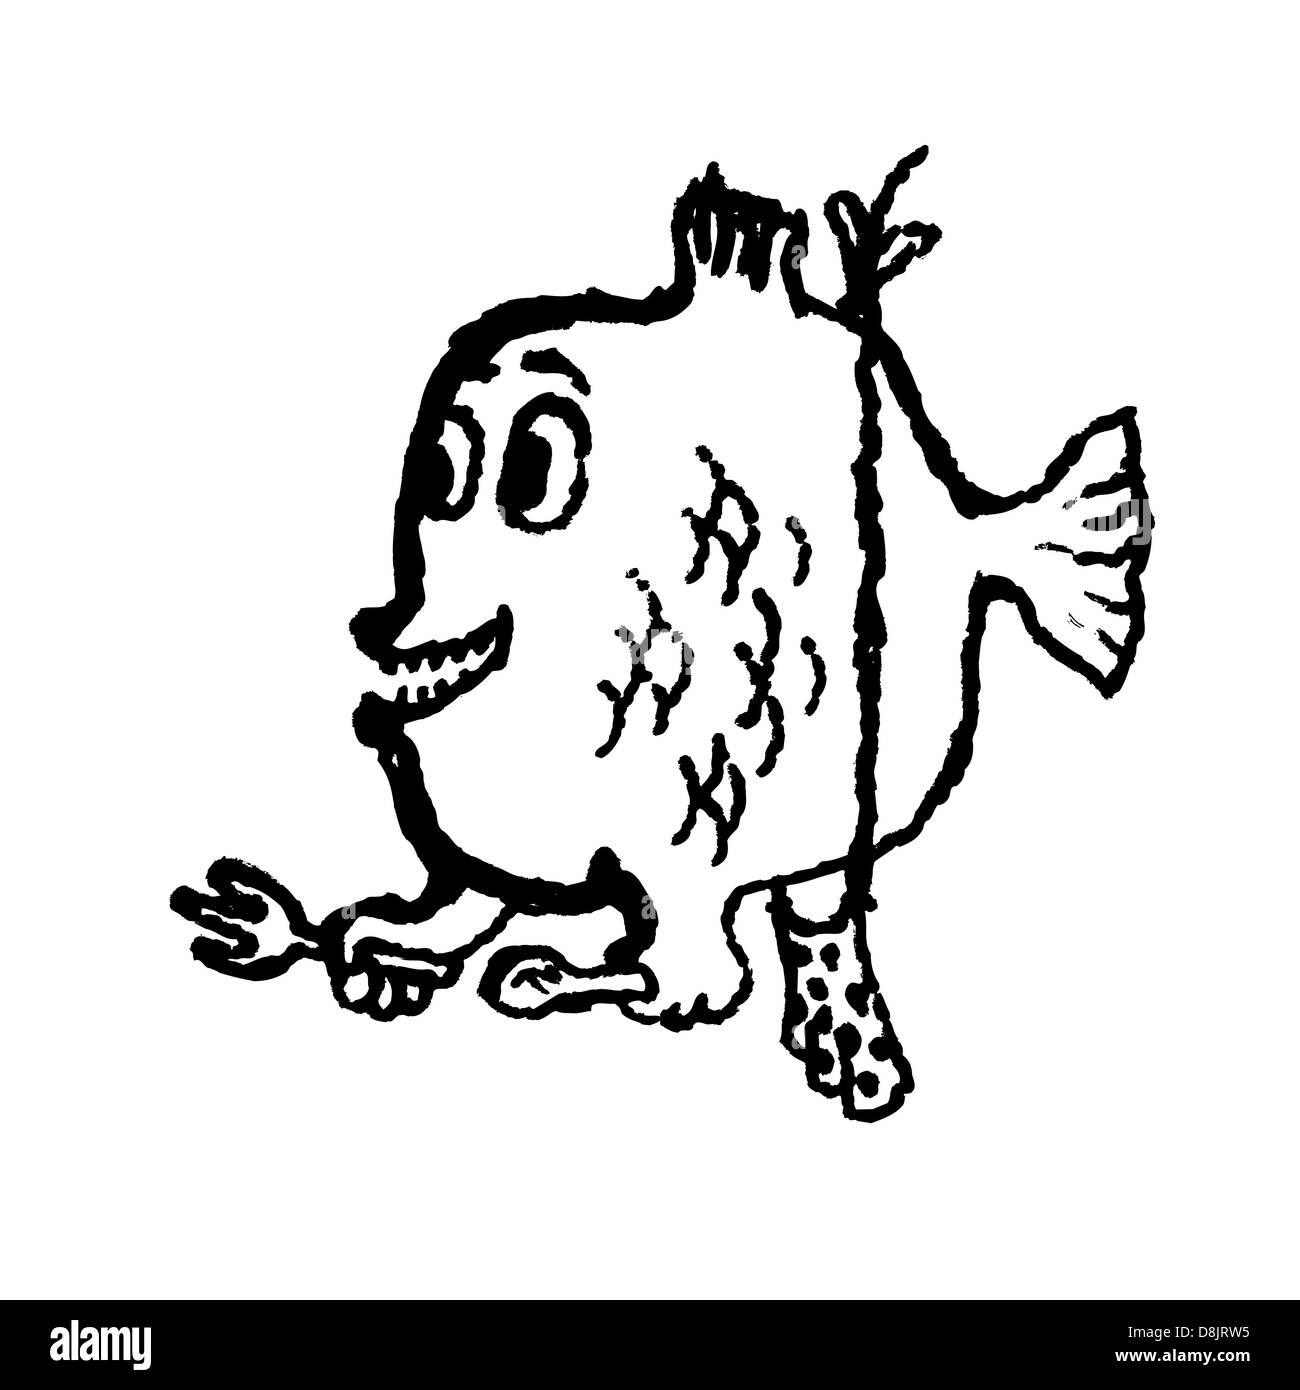 Piranha. Doodle illustration. Stock Photo